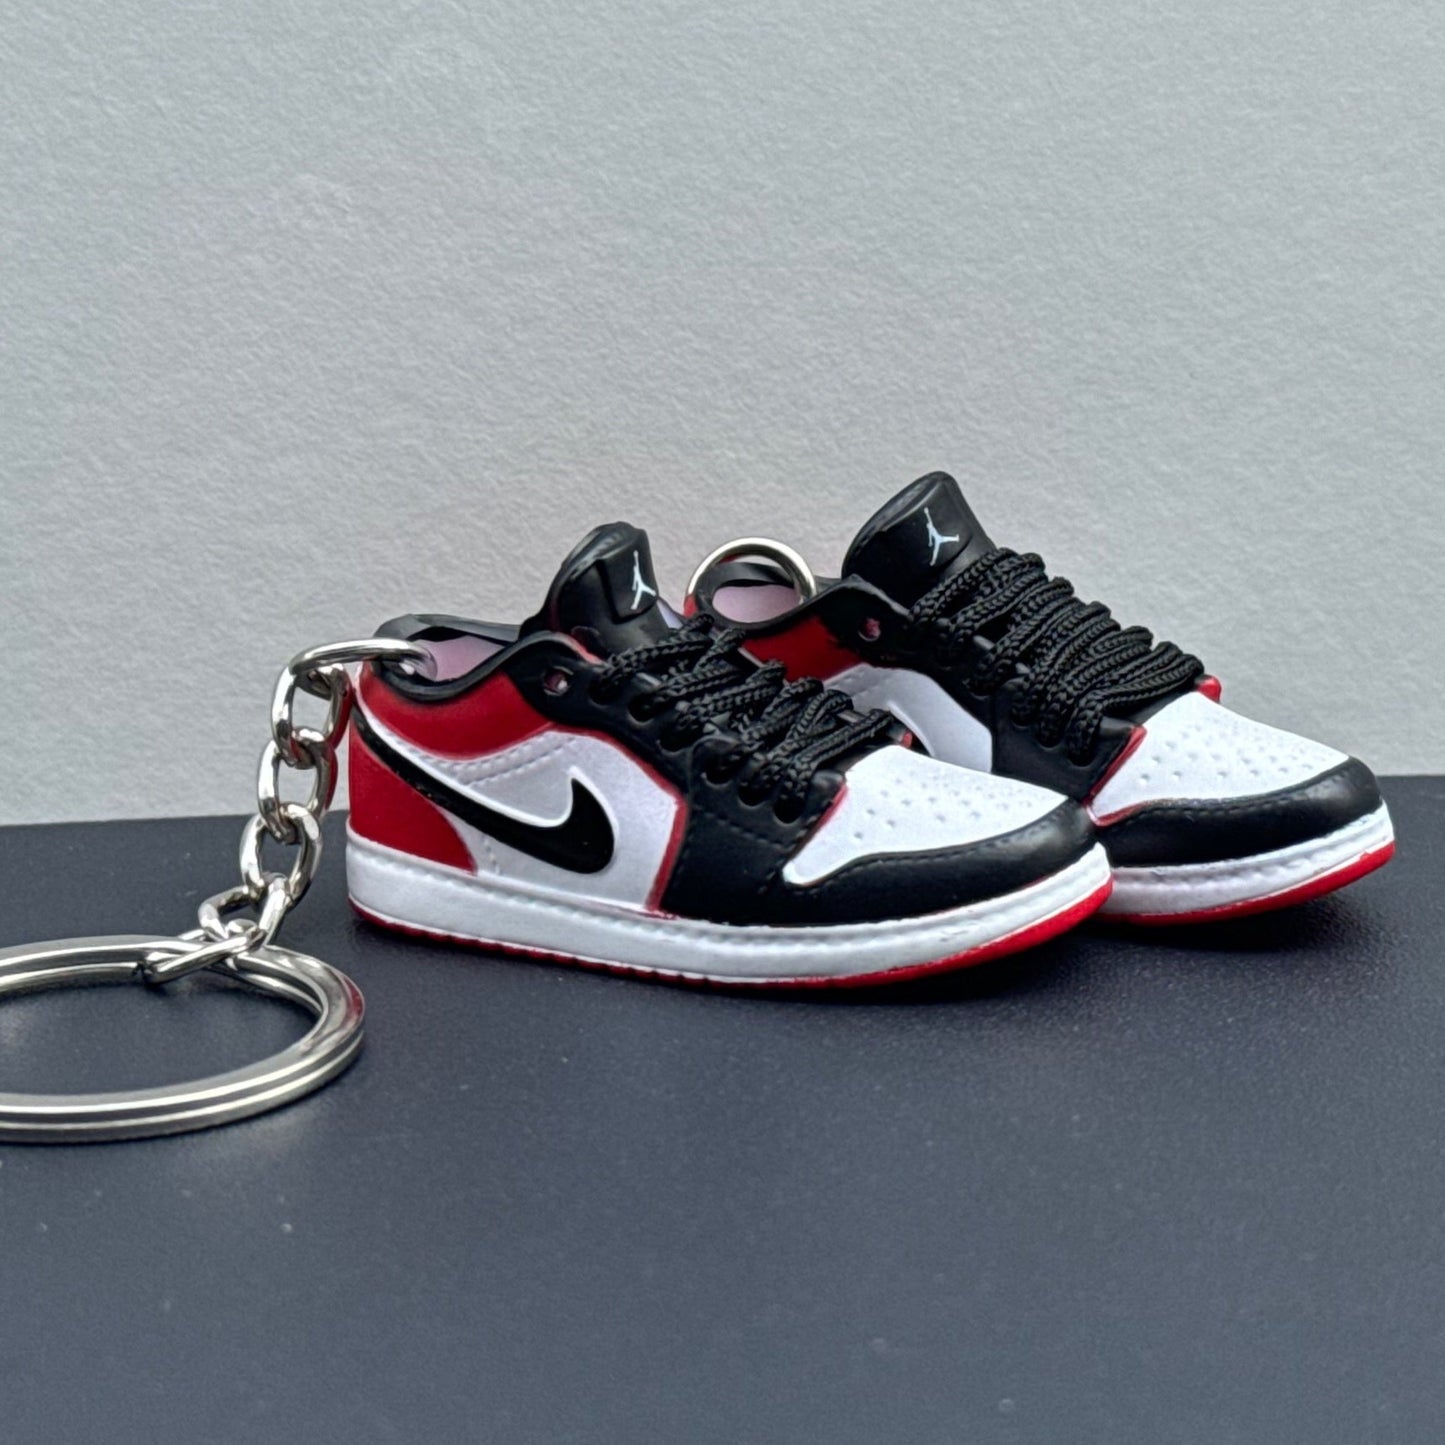 Air Jordan 1 Low 3D Keyring - "Black Toe"